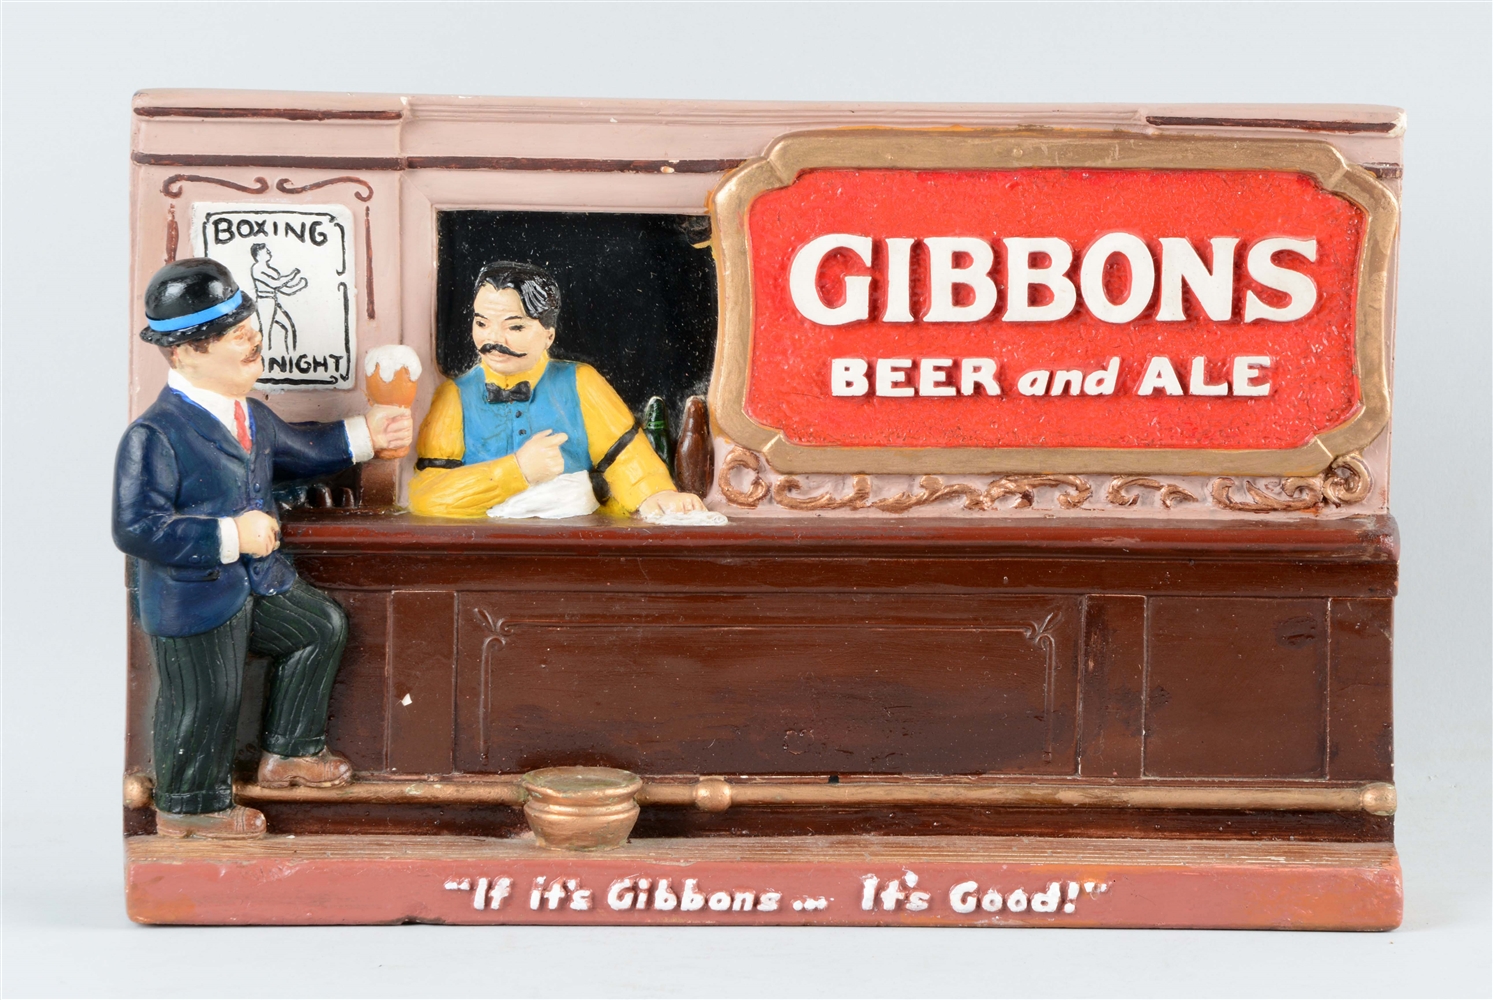 GIBBONS BEER CHALKWARE BACK BAR ADVERTISING DISPLAY.